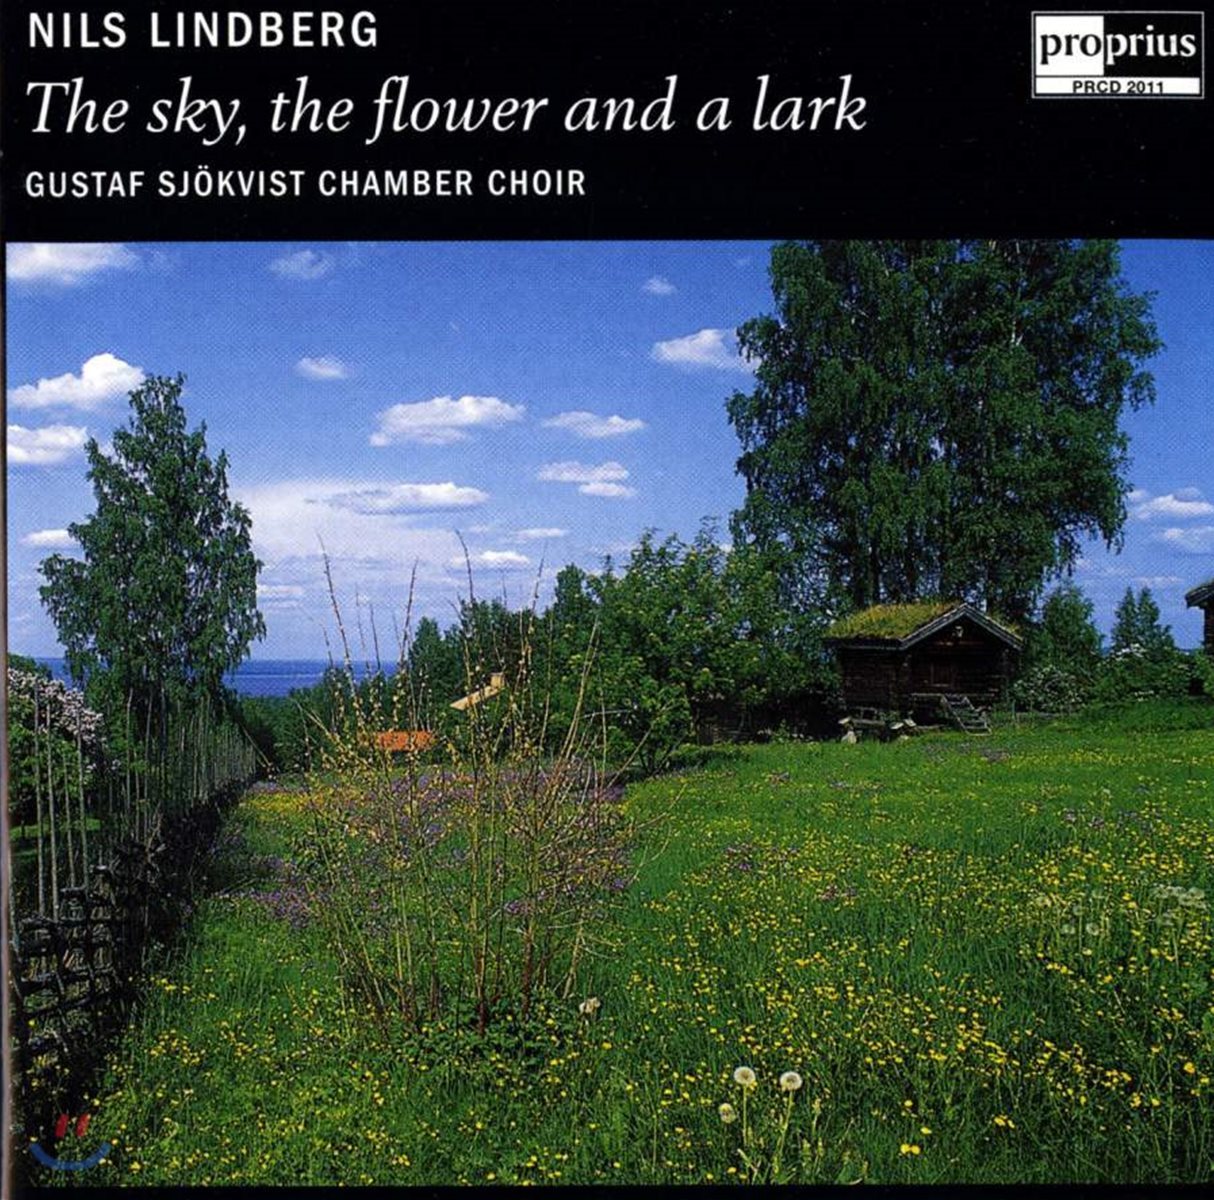 Gustav Sjokvist Chamber Choir 닐스 린드버그: 하늘, 꽃 그리고 종달새 (Nils Lindberg: The Sky, The Flower &amp; A Lark)